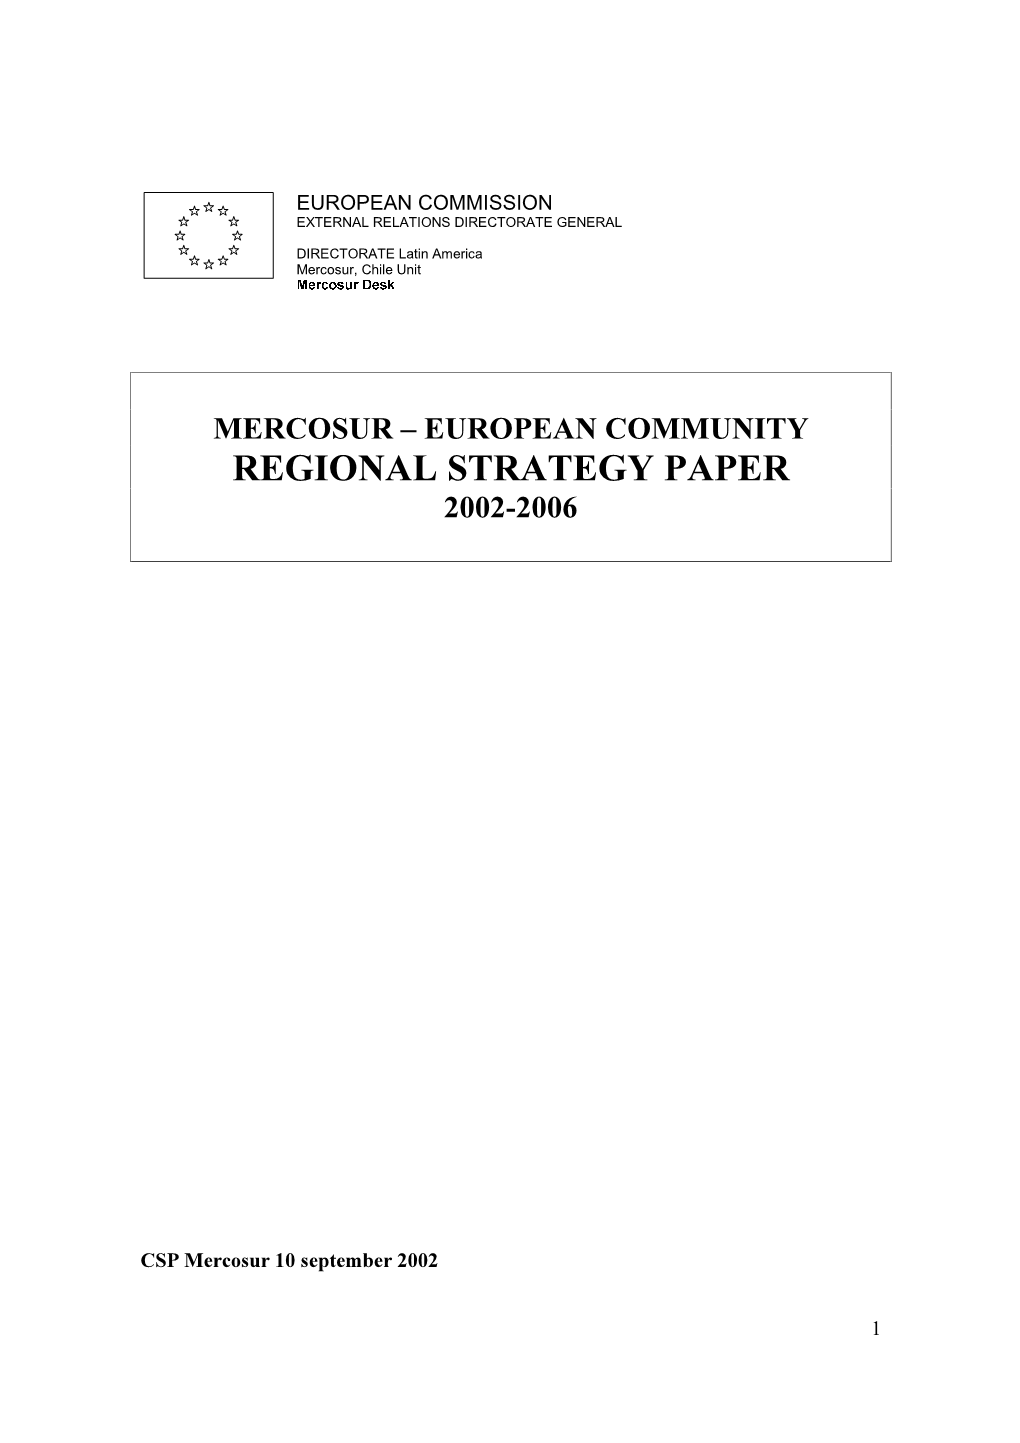 Mercosur: European Community Regional Strategy Paper 2002-2006